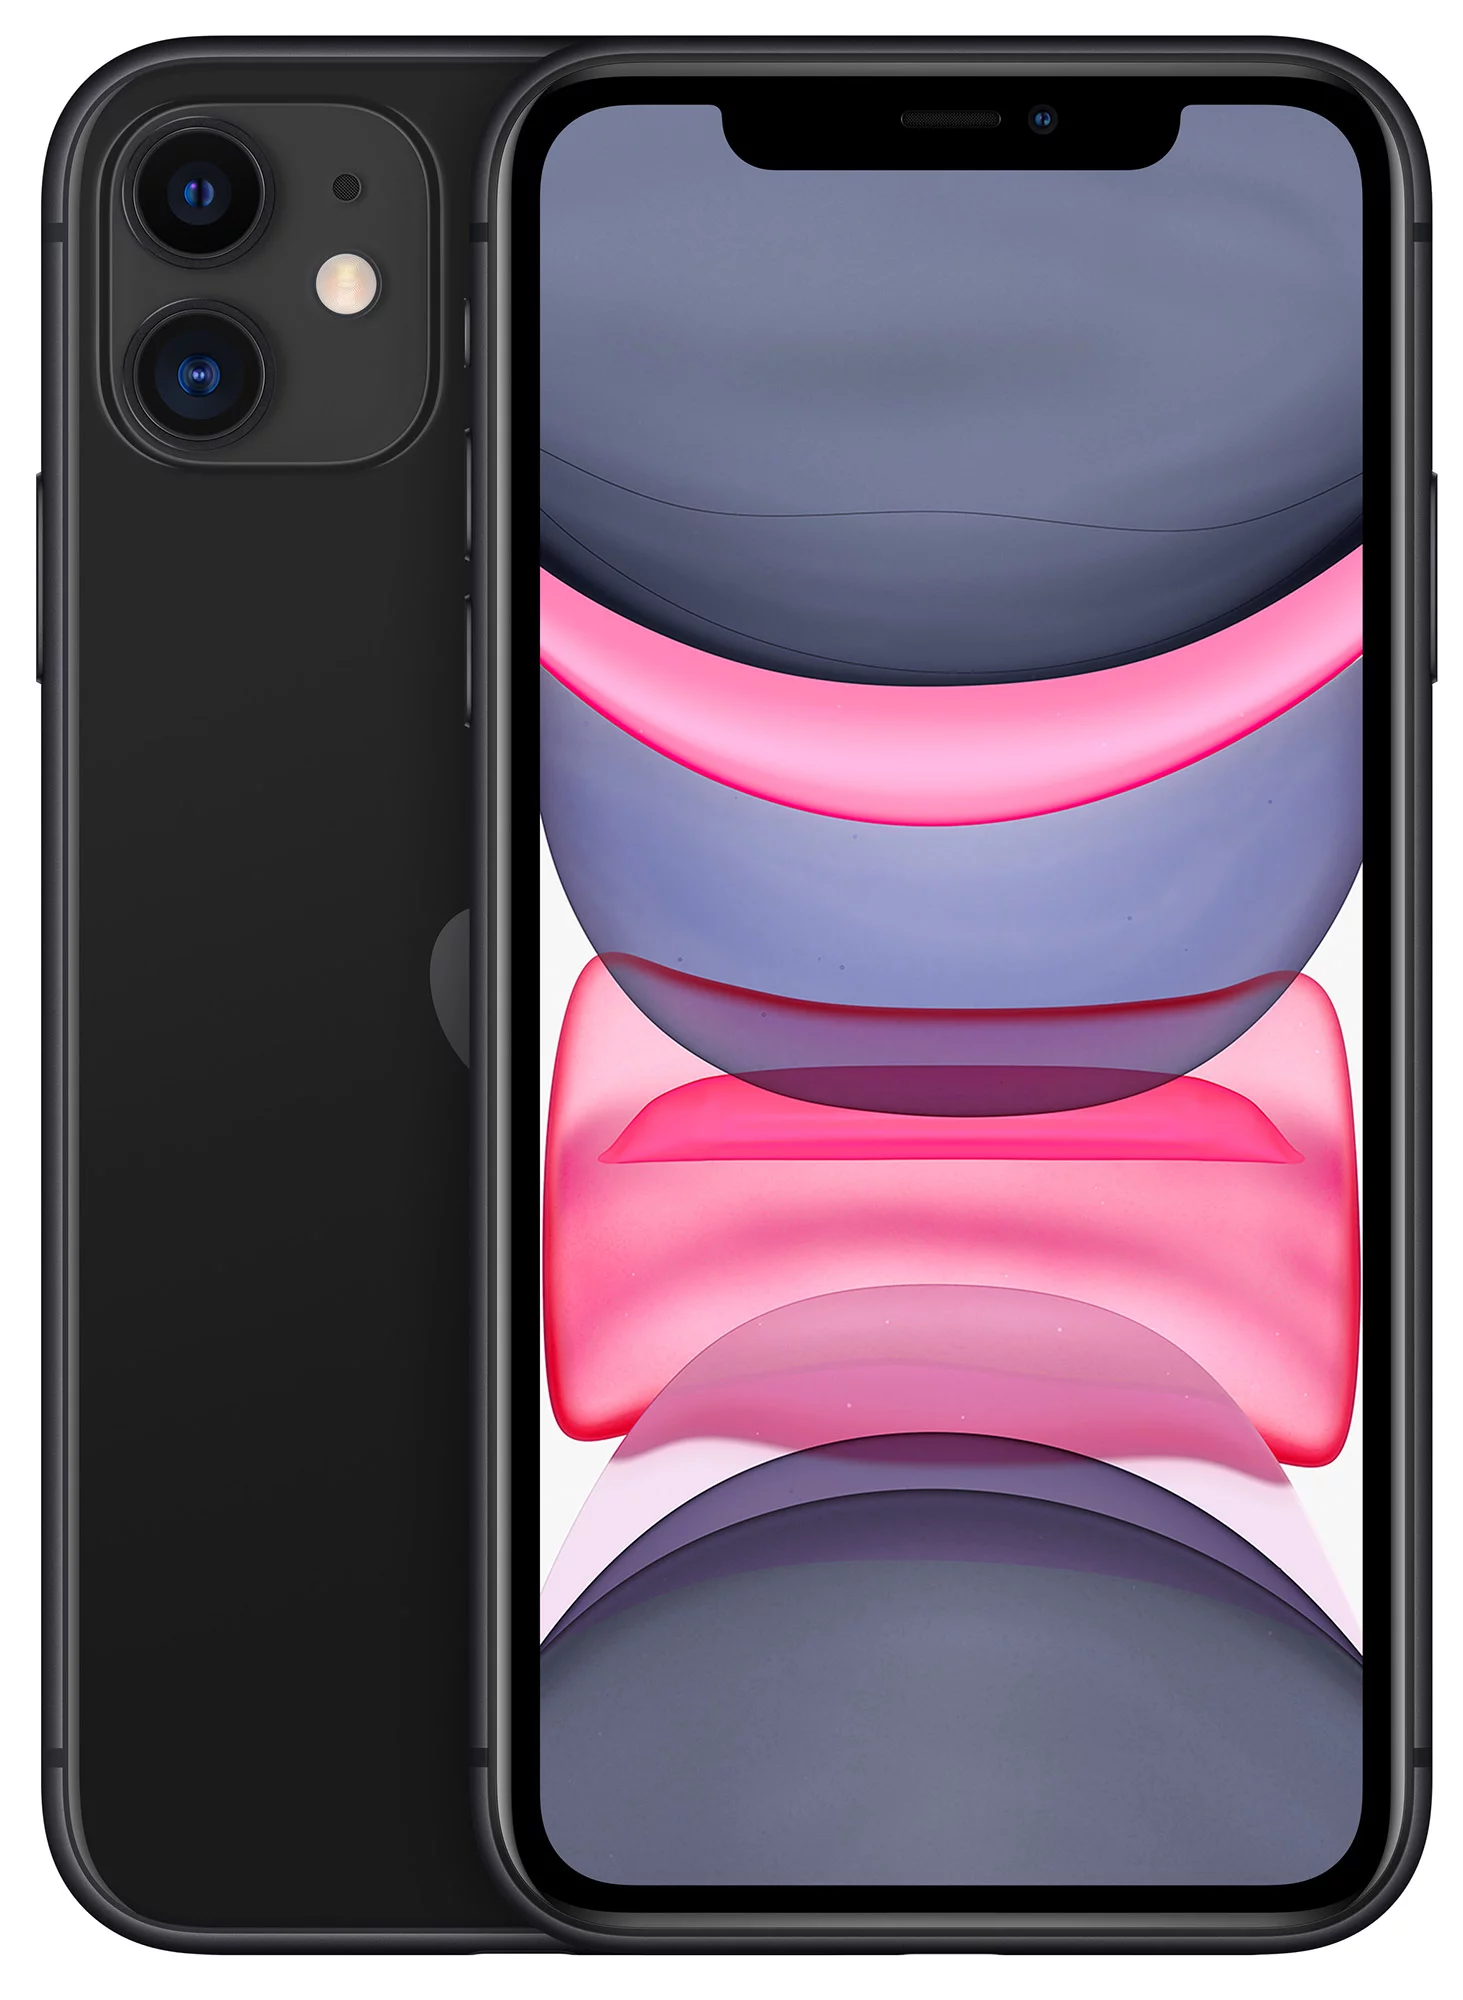 Apple iPhone 11 64GB Black (A2221) (With Charger & EarPods) პროდუქტის კოდი: 102507